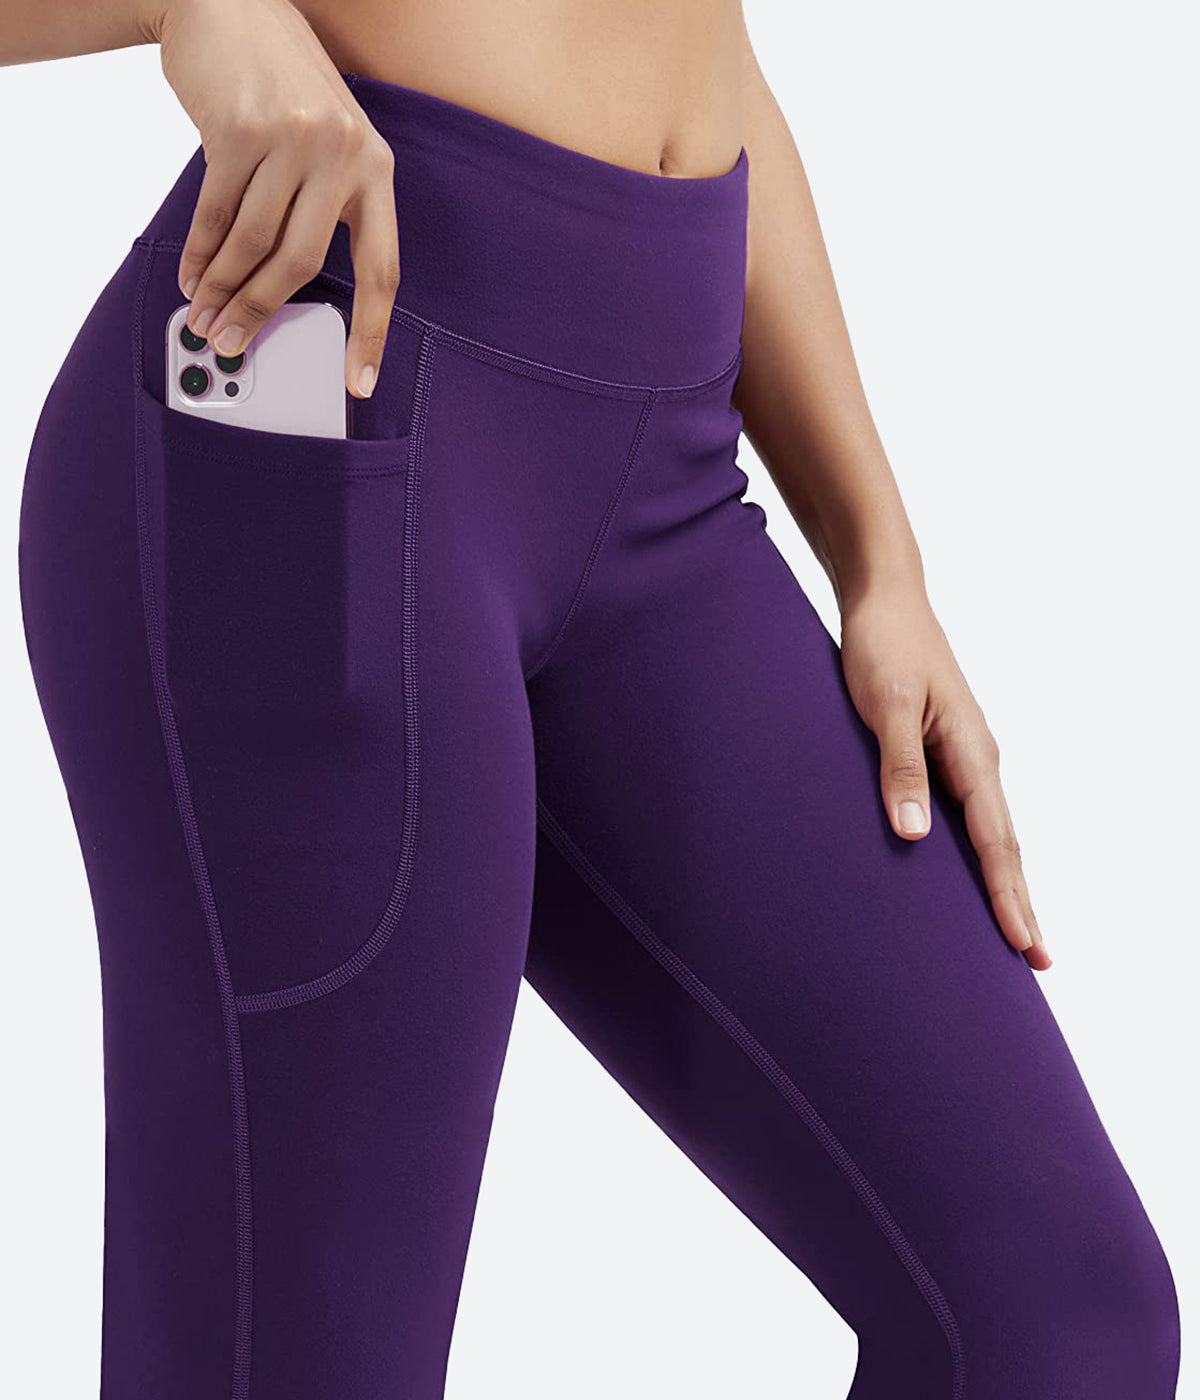 Gaiam Women's Luxe Yoga Capri with Pockets